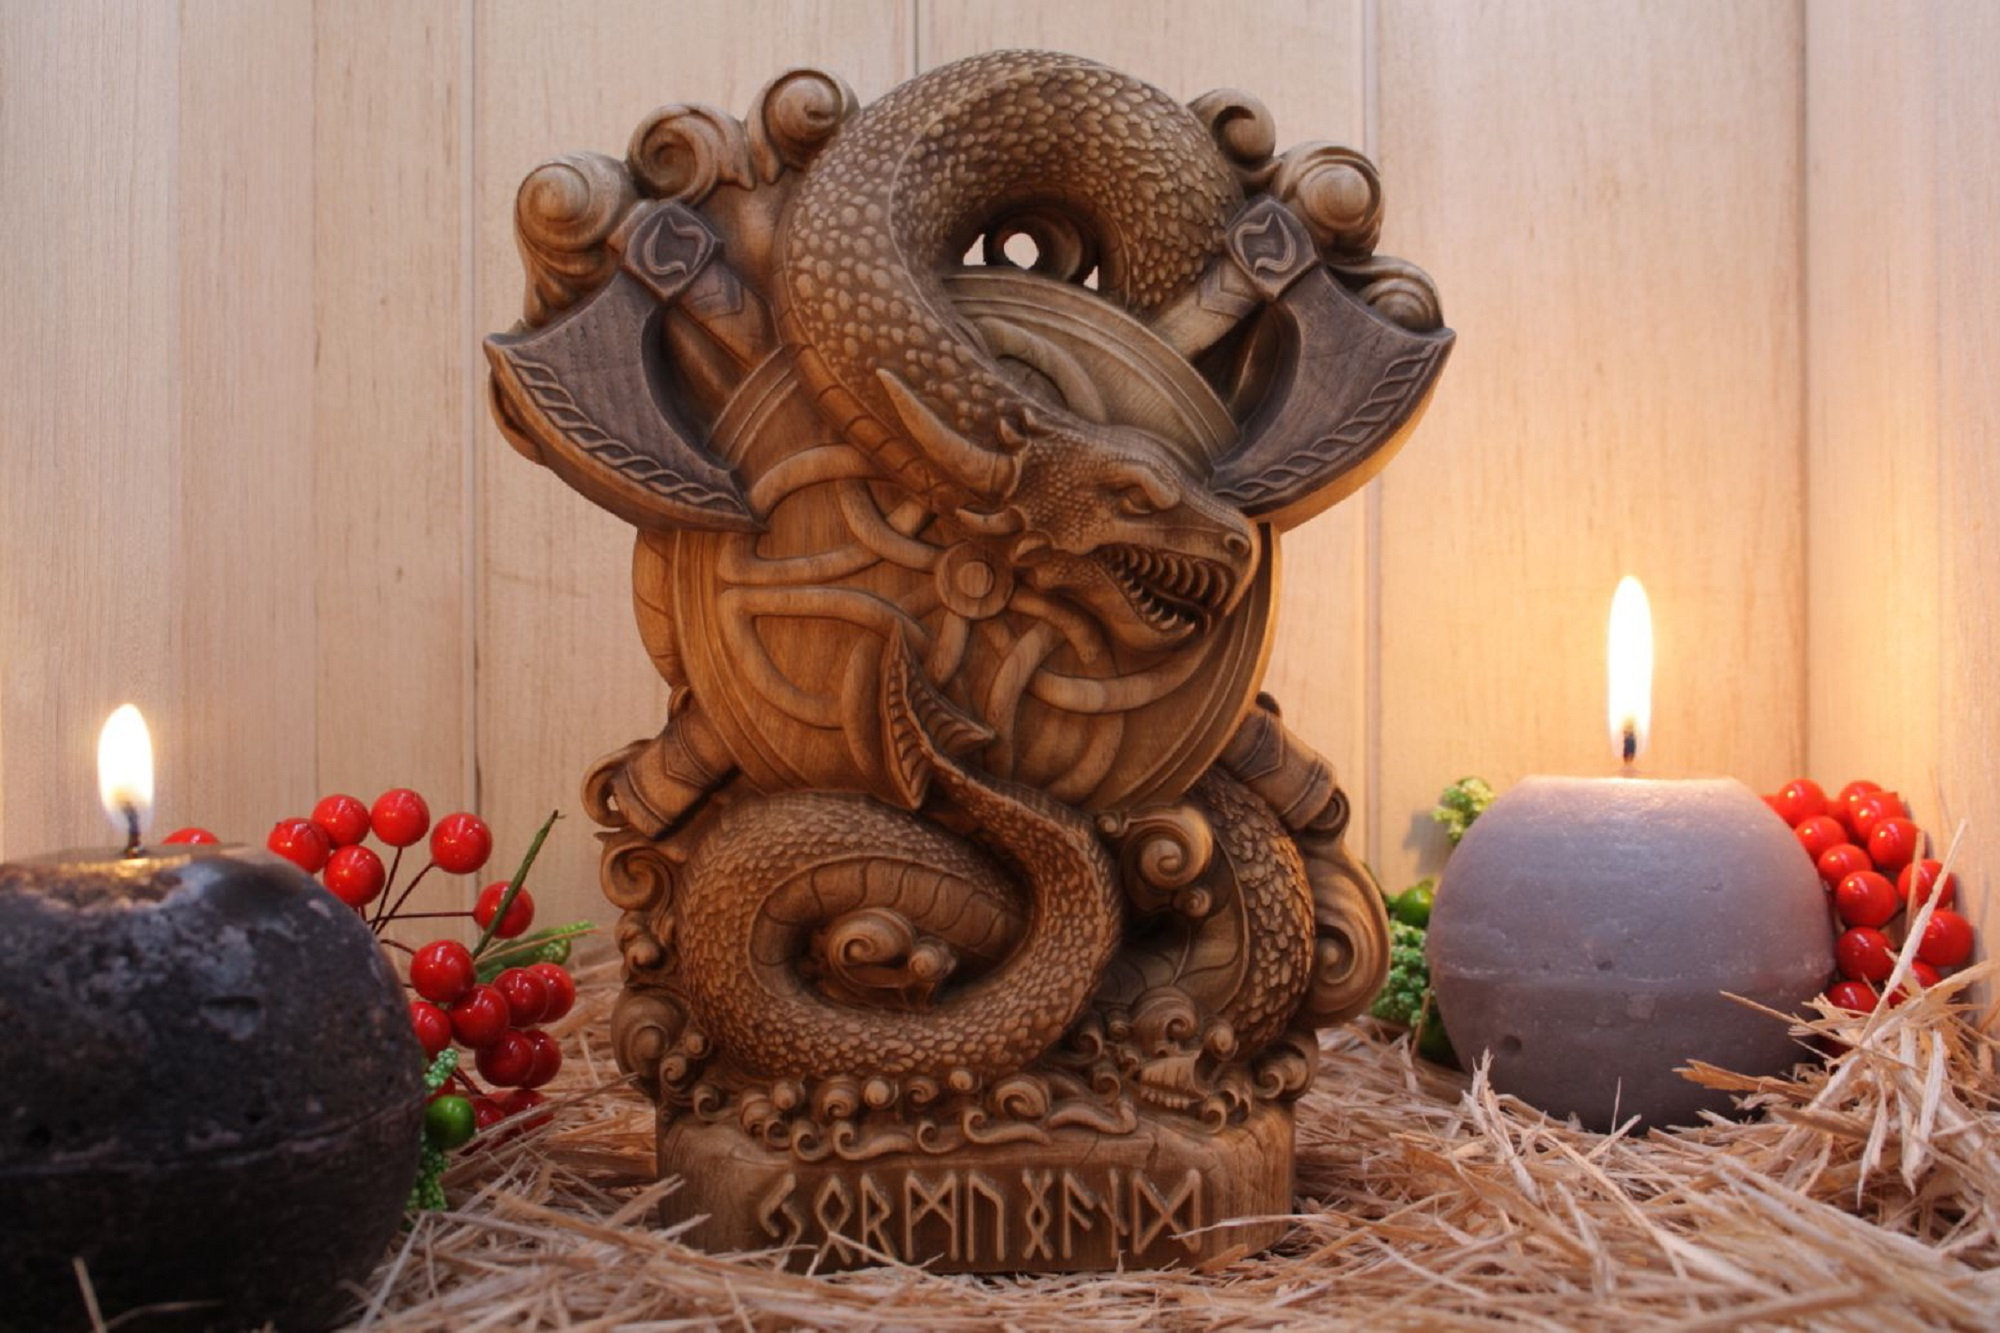 Dragon Jörmungandr, Norse pagan gods, Wooden wood carving – Art